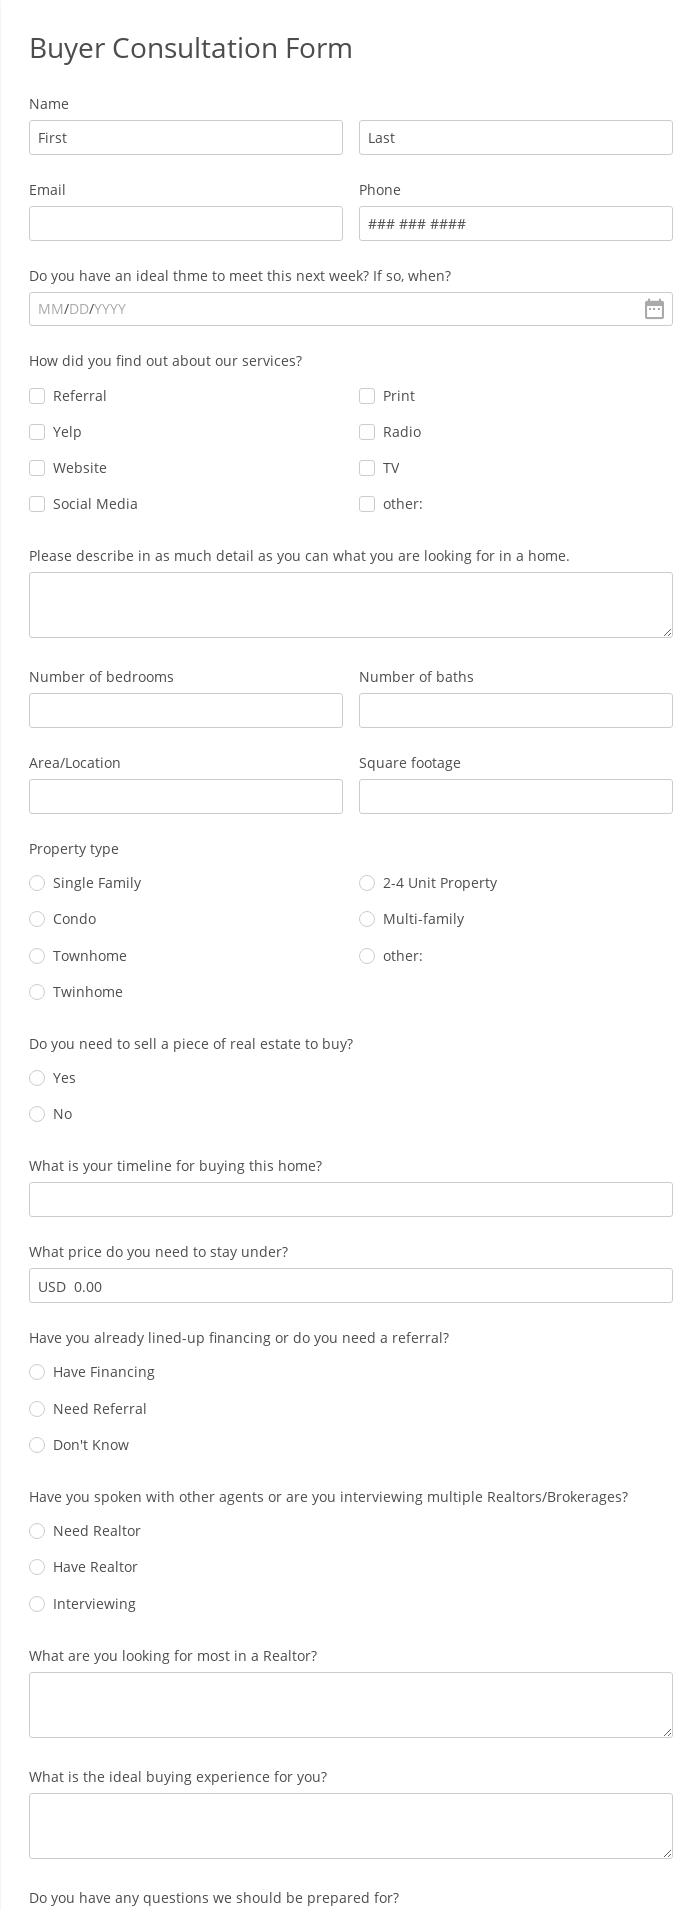 Buyer Consultation Form